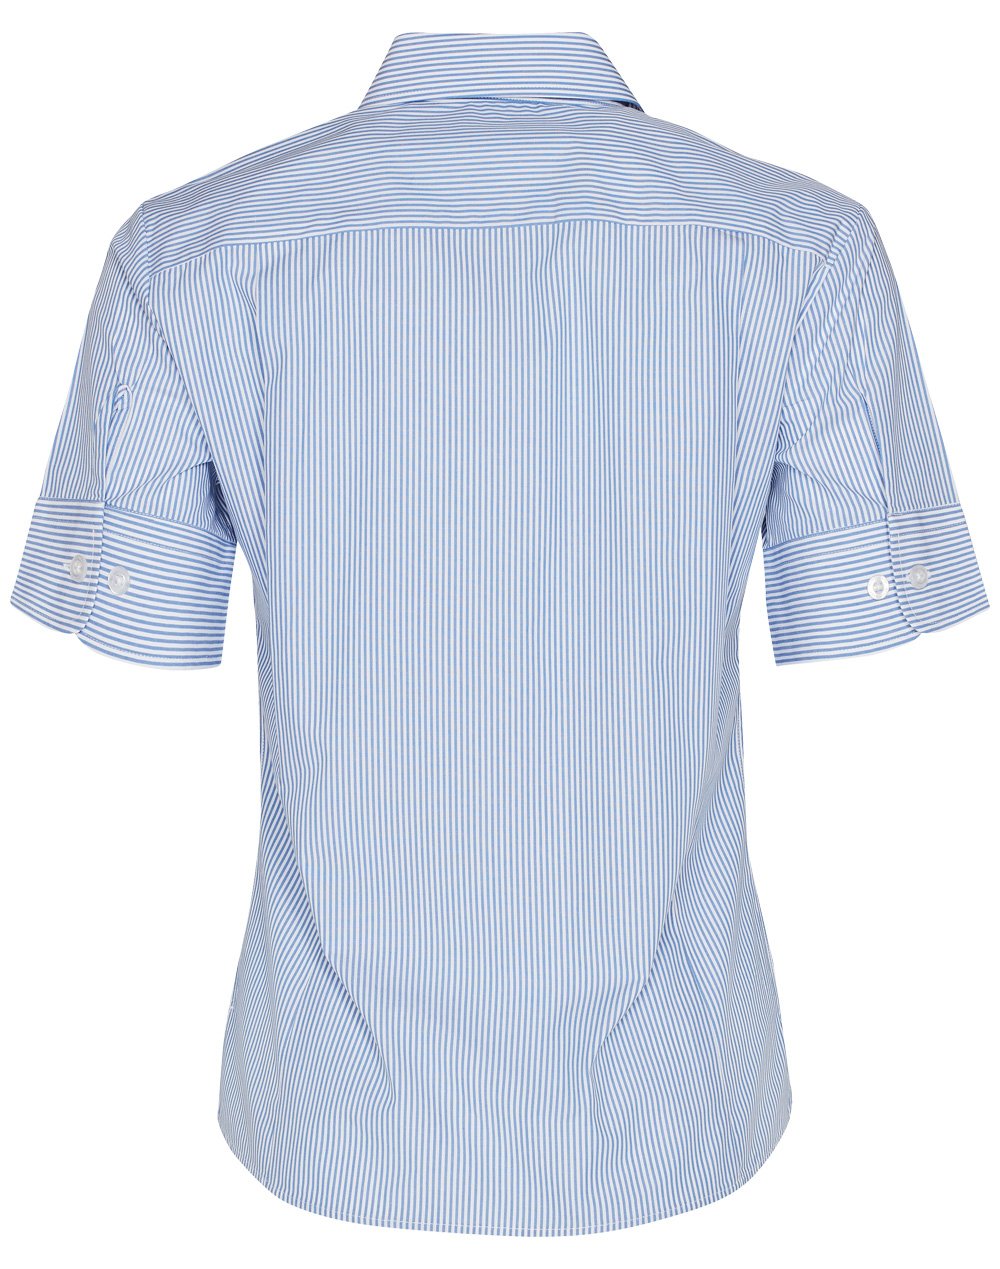 Benchmark M8234 Ladies Balance Stripe Short Sleeve Shirt